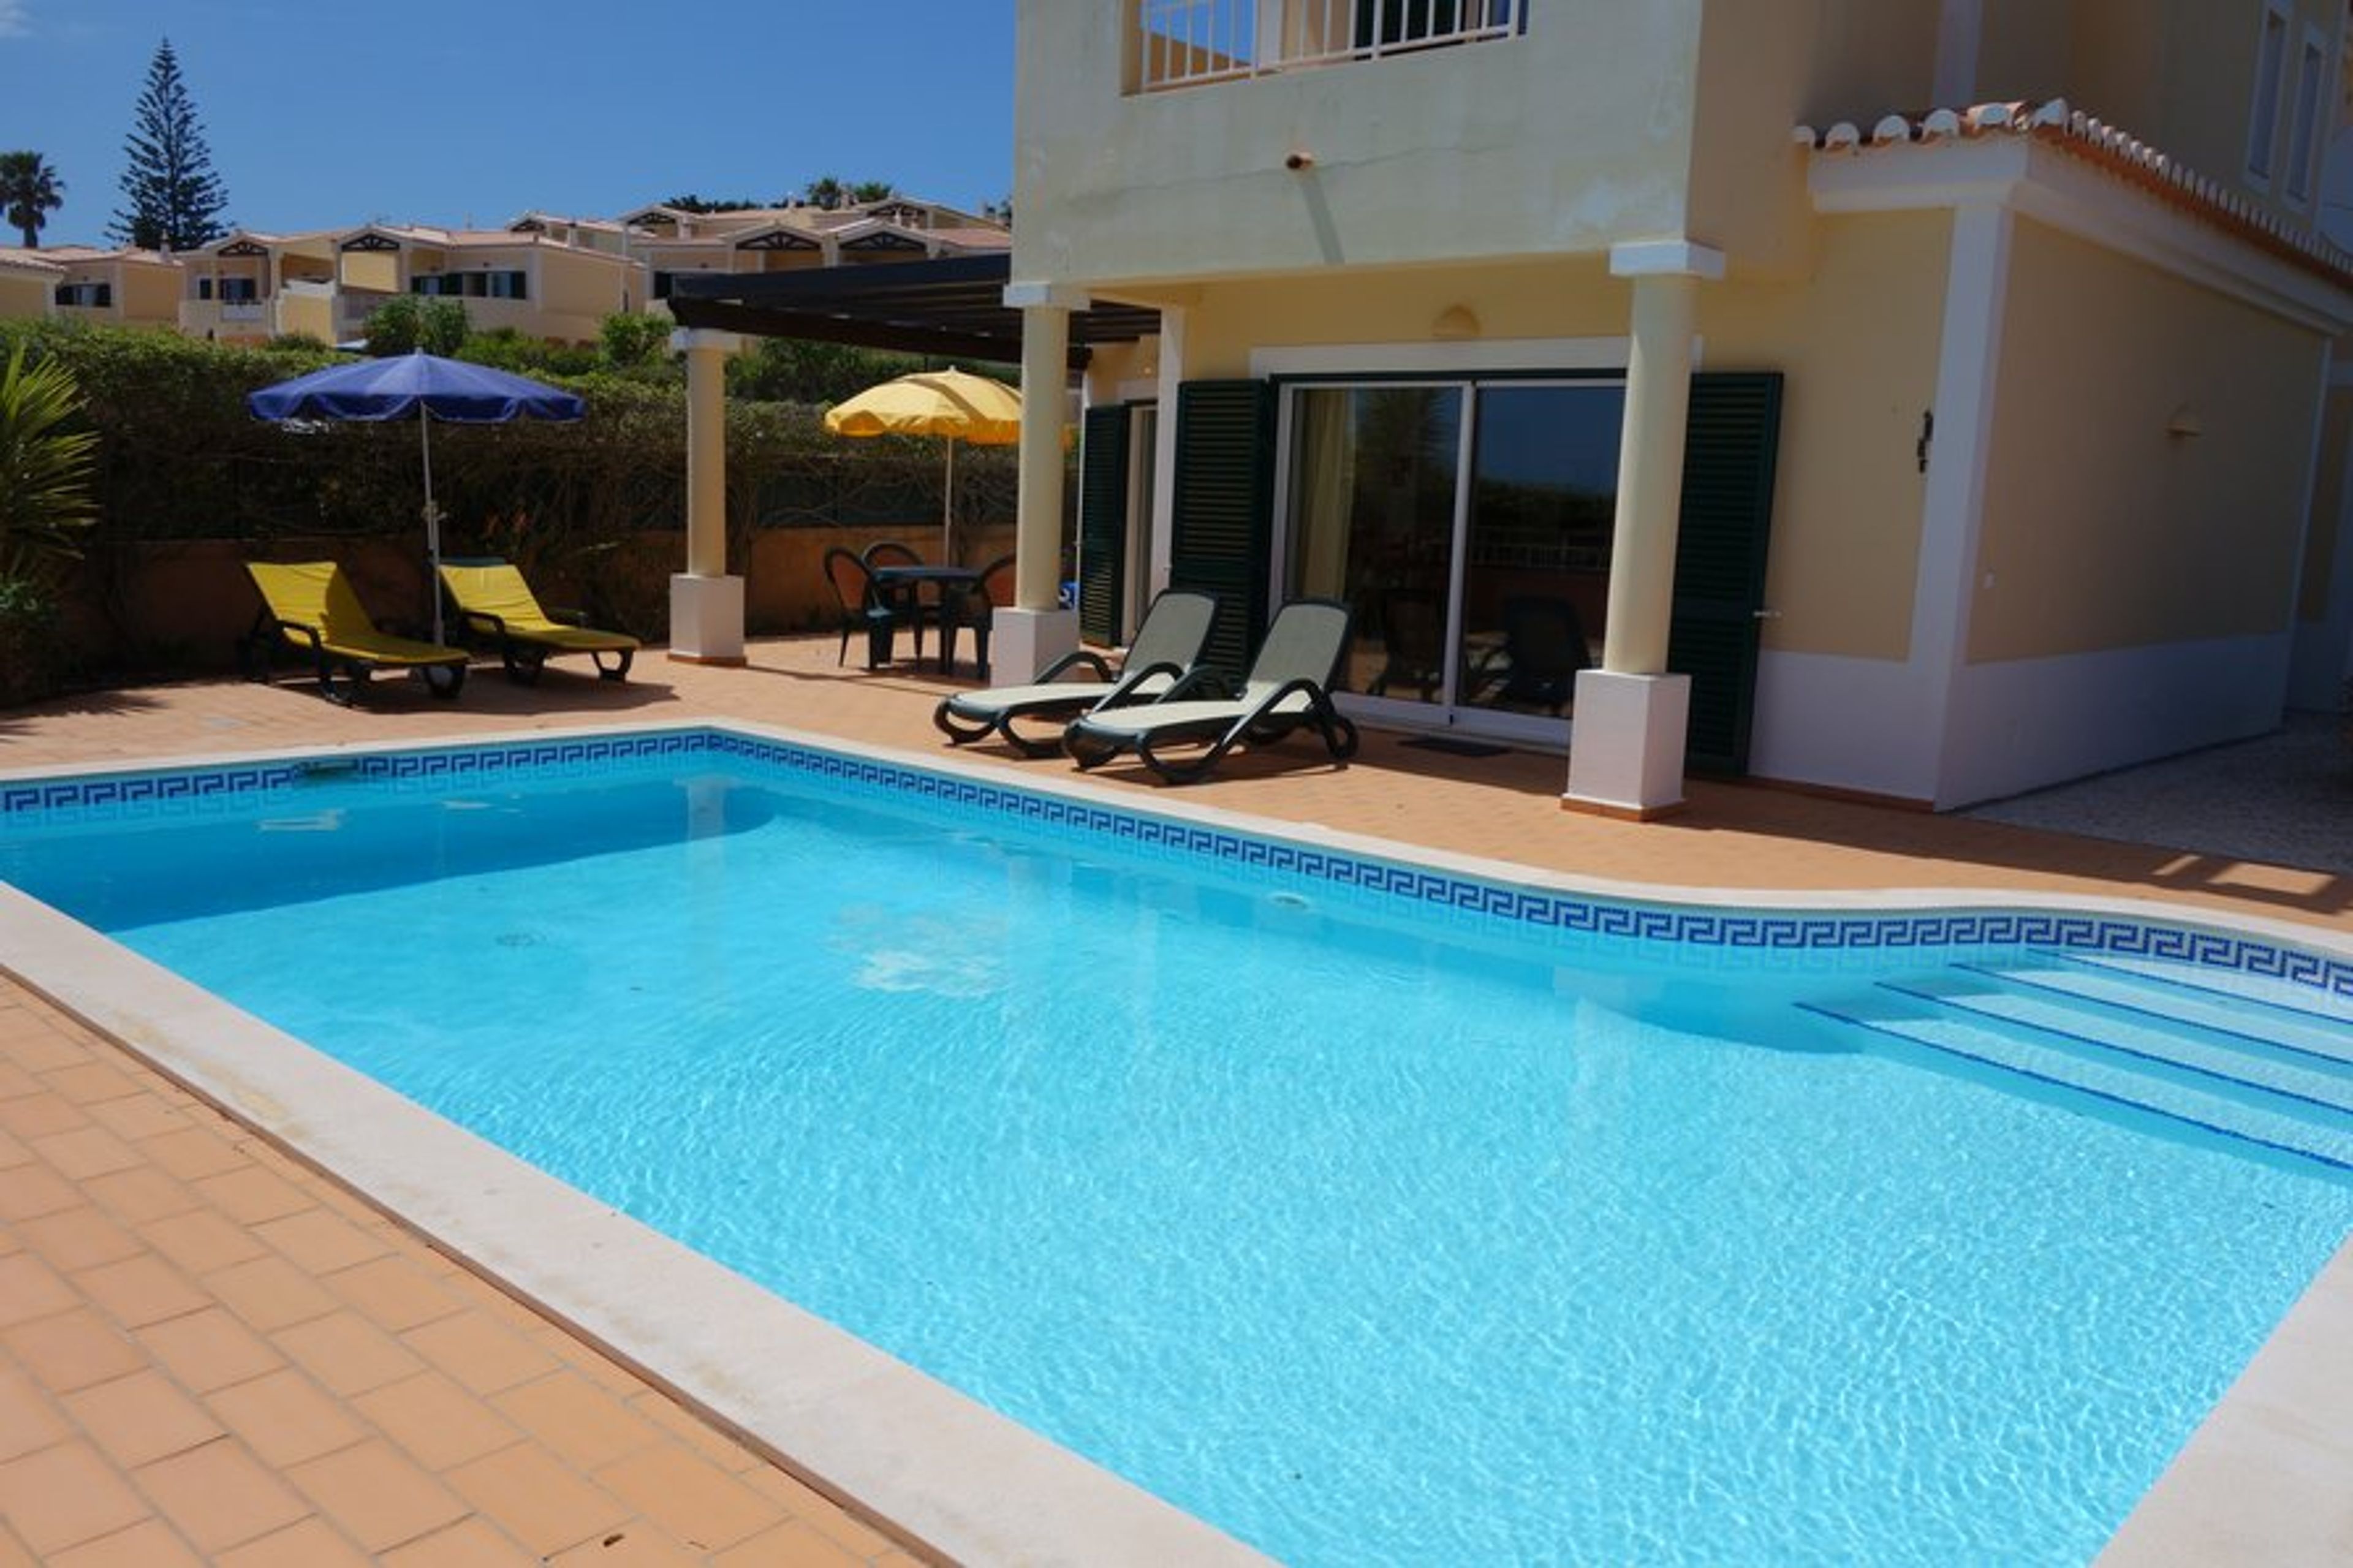 Casa Encantadora swimming pool and front of villa